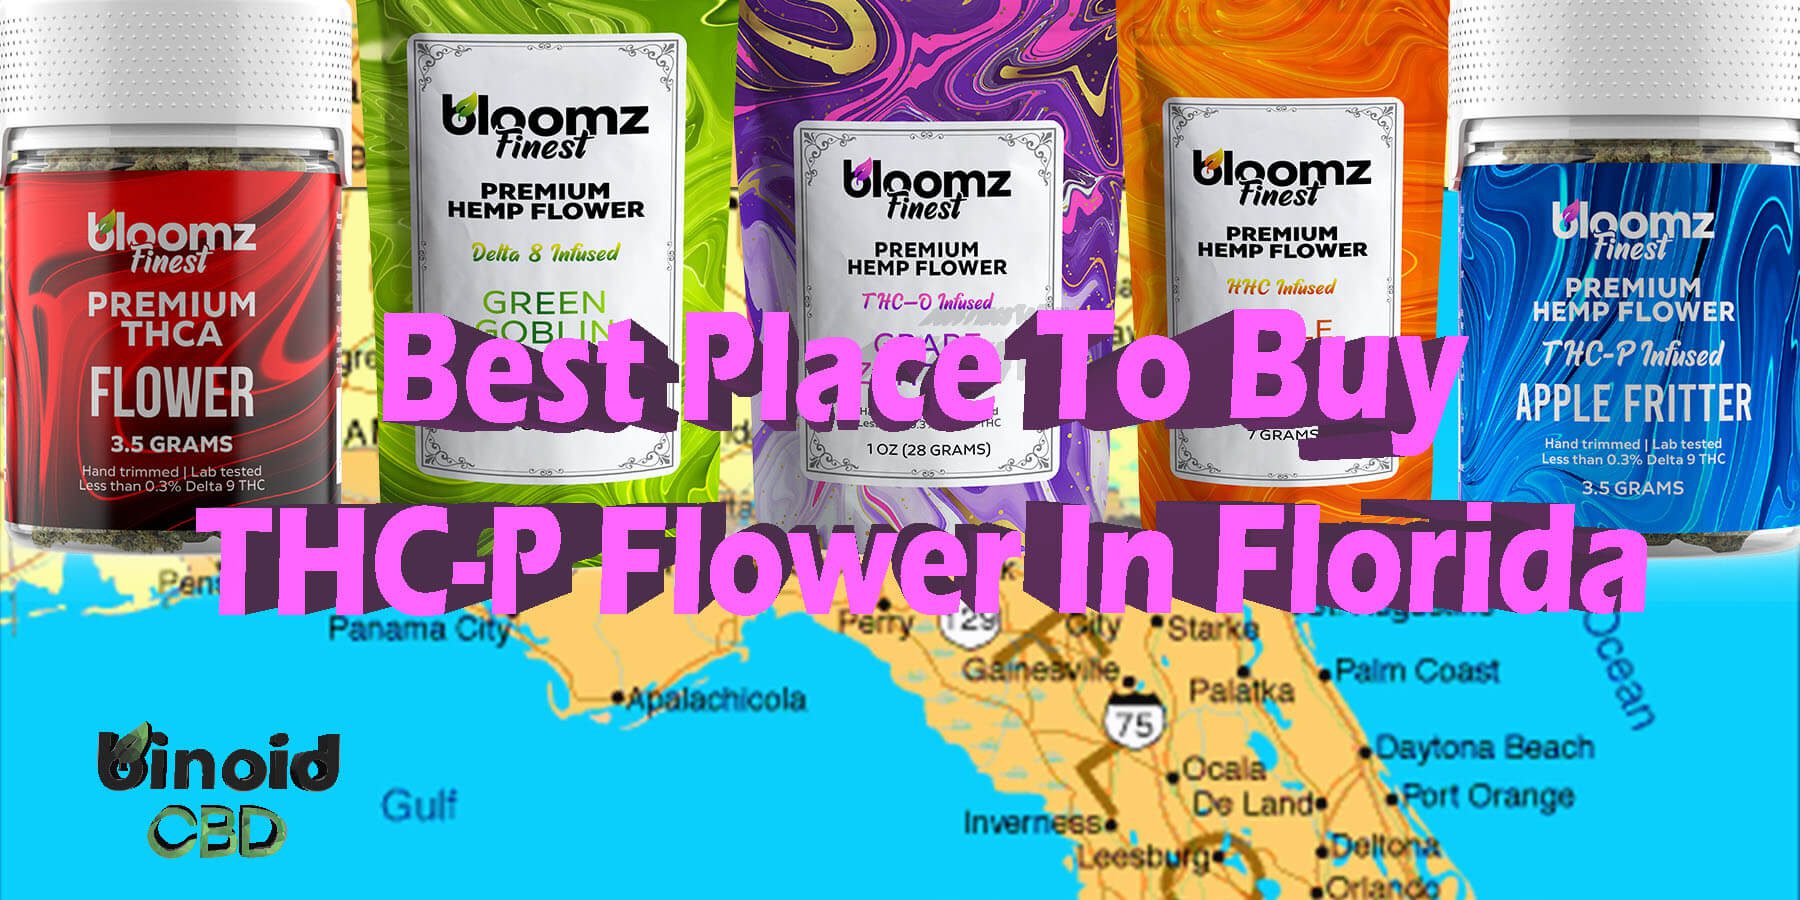 Buy THCP Hemp Flower Florida Pre Rolls Get Online Near Me For Sale Best Brand-Strongest Real Legal Store Shop Reddit